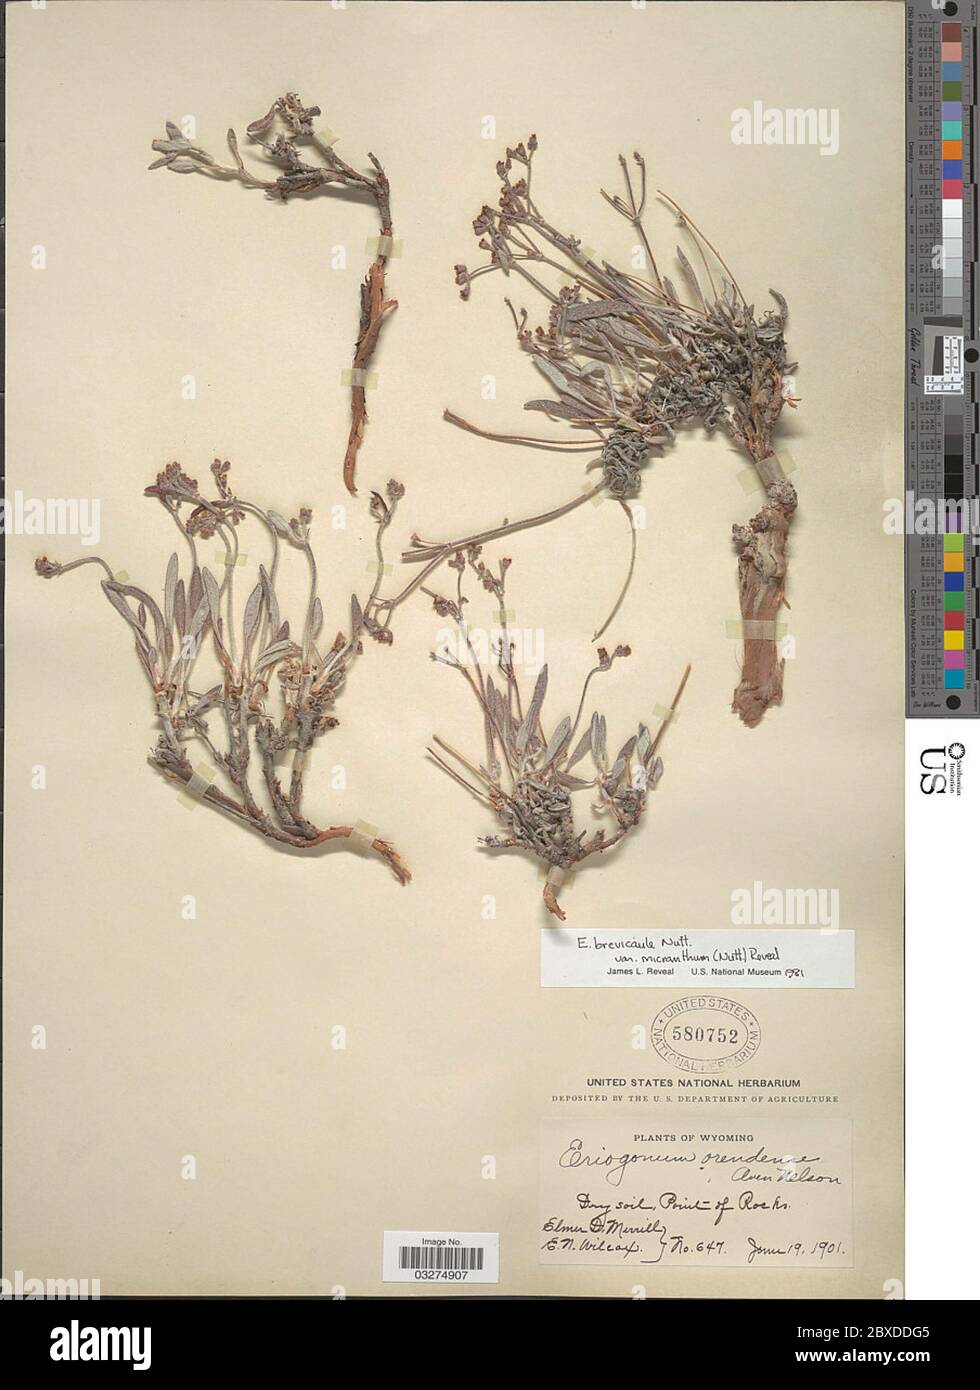 Eriogonum brevicaule var micranthum Nutt Reveal Eriogonum brevicaule var micranthum Nutt Reveal. Stock Photo